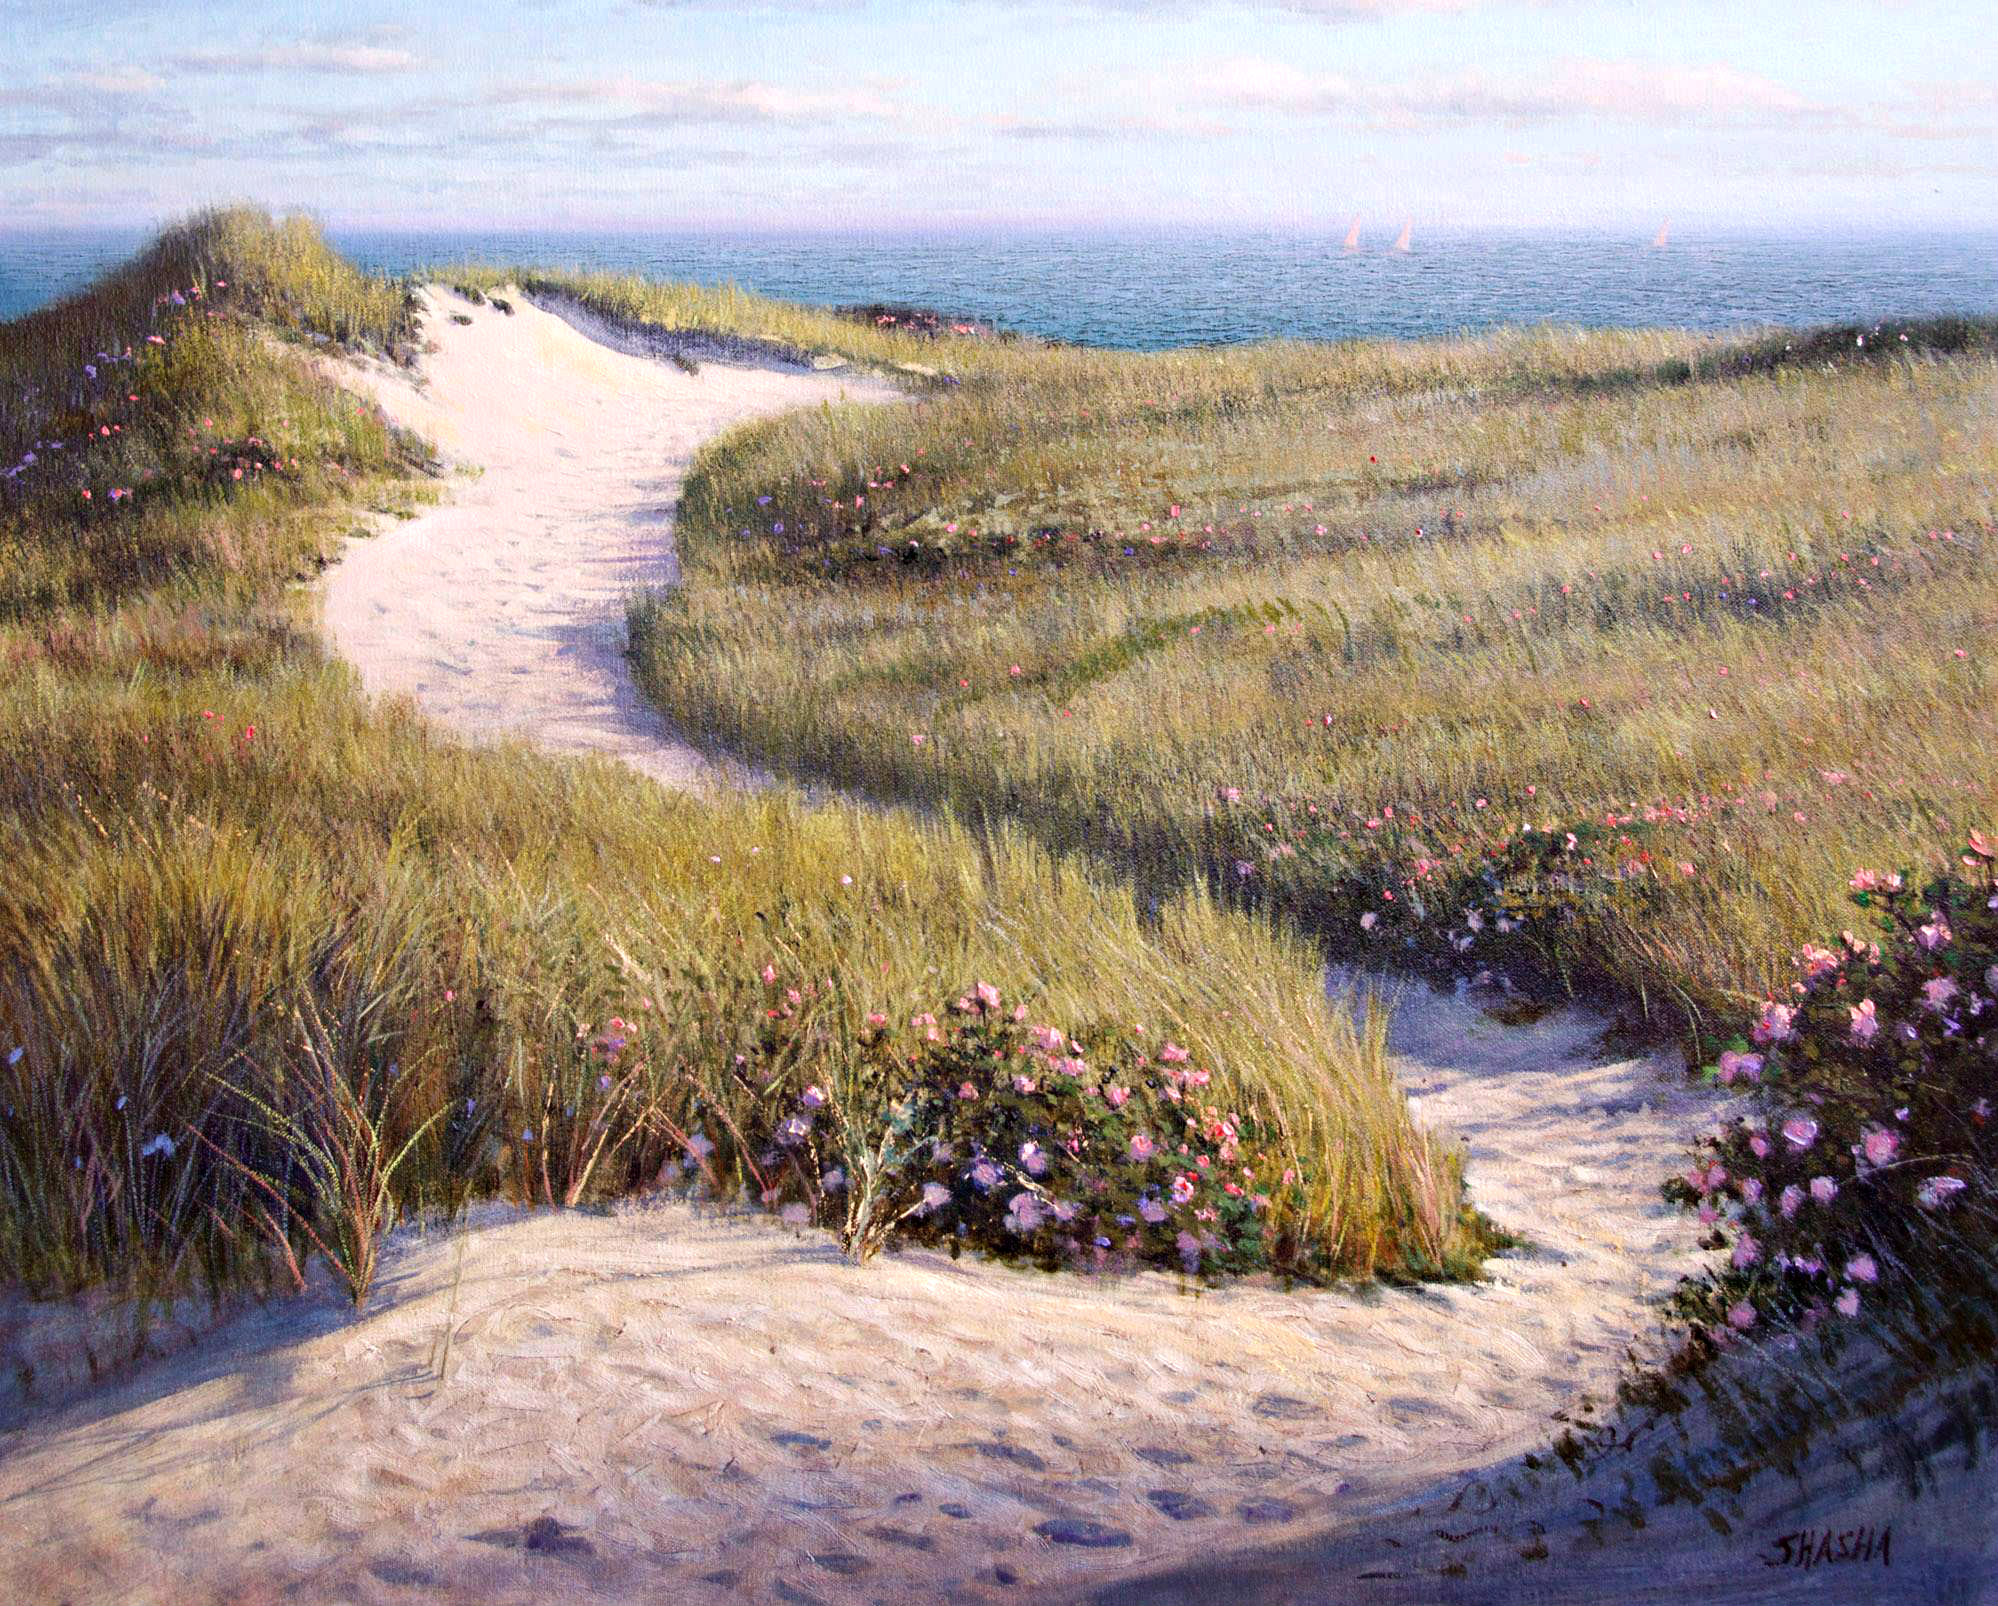 En plein air painting Dune Winder, by Mark Shasha